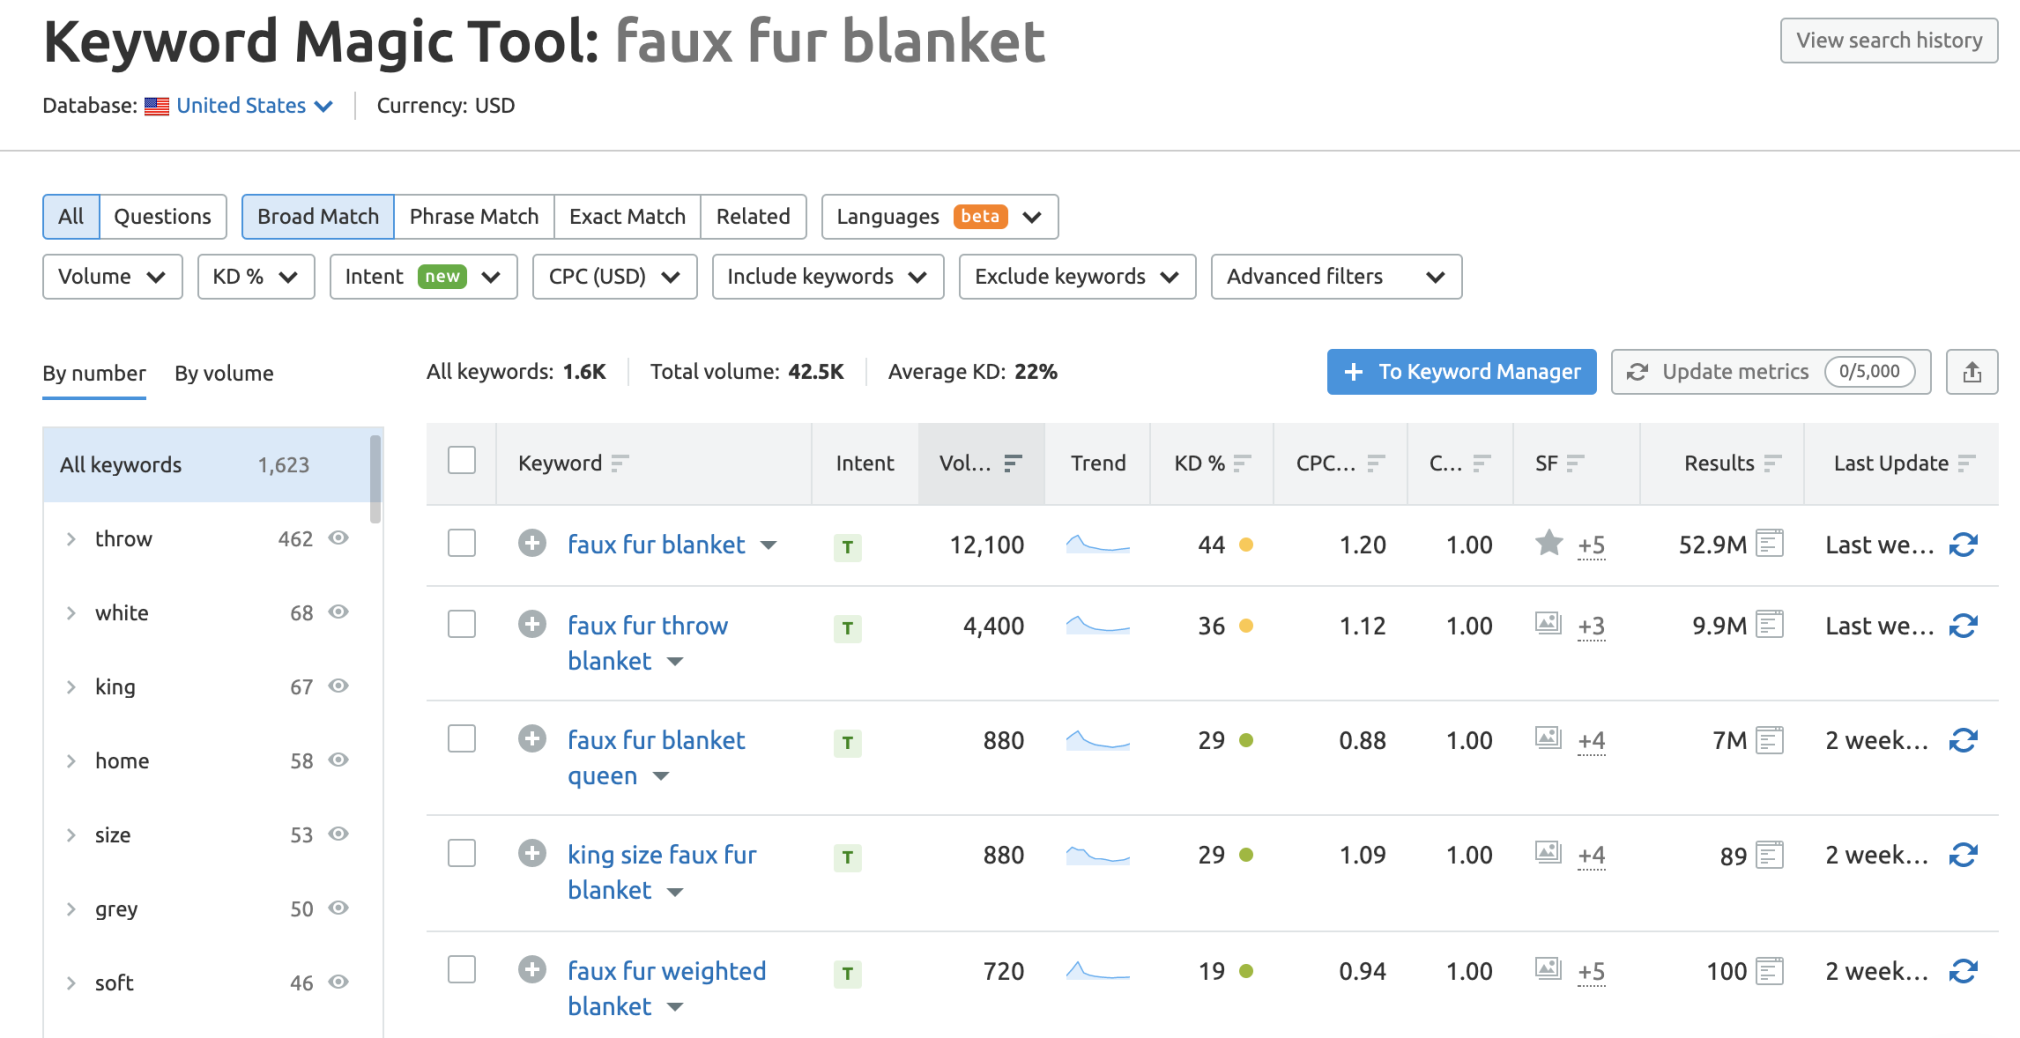 Keyword Magic Tool results for faux fur blanket